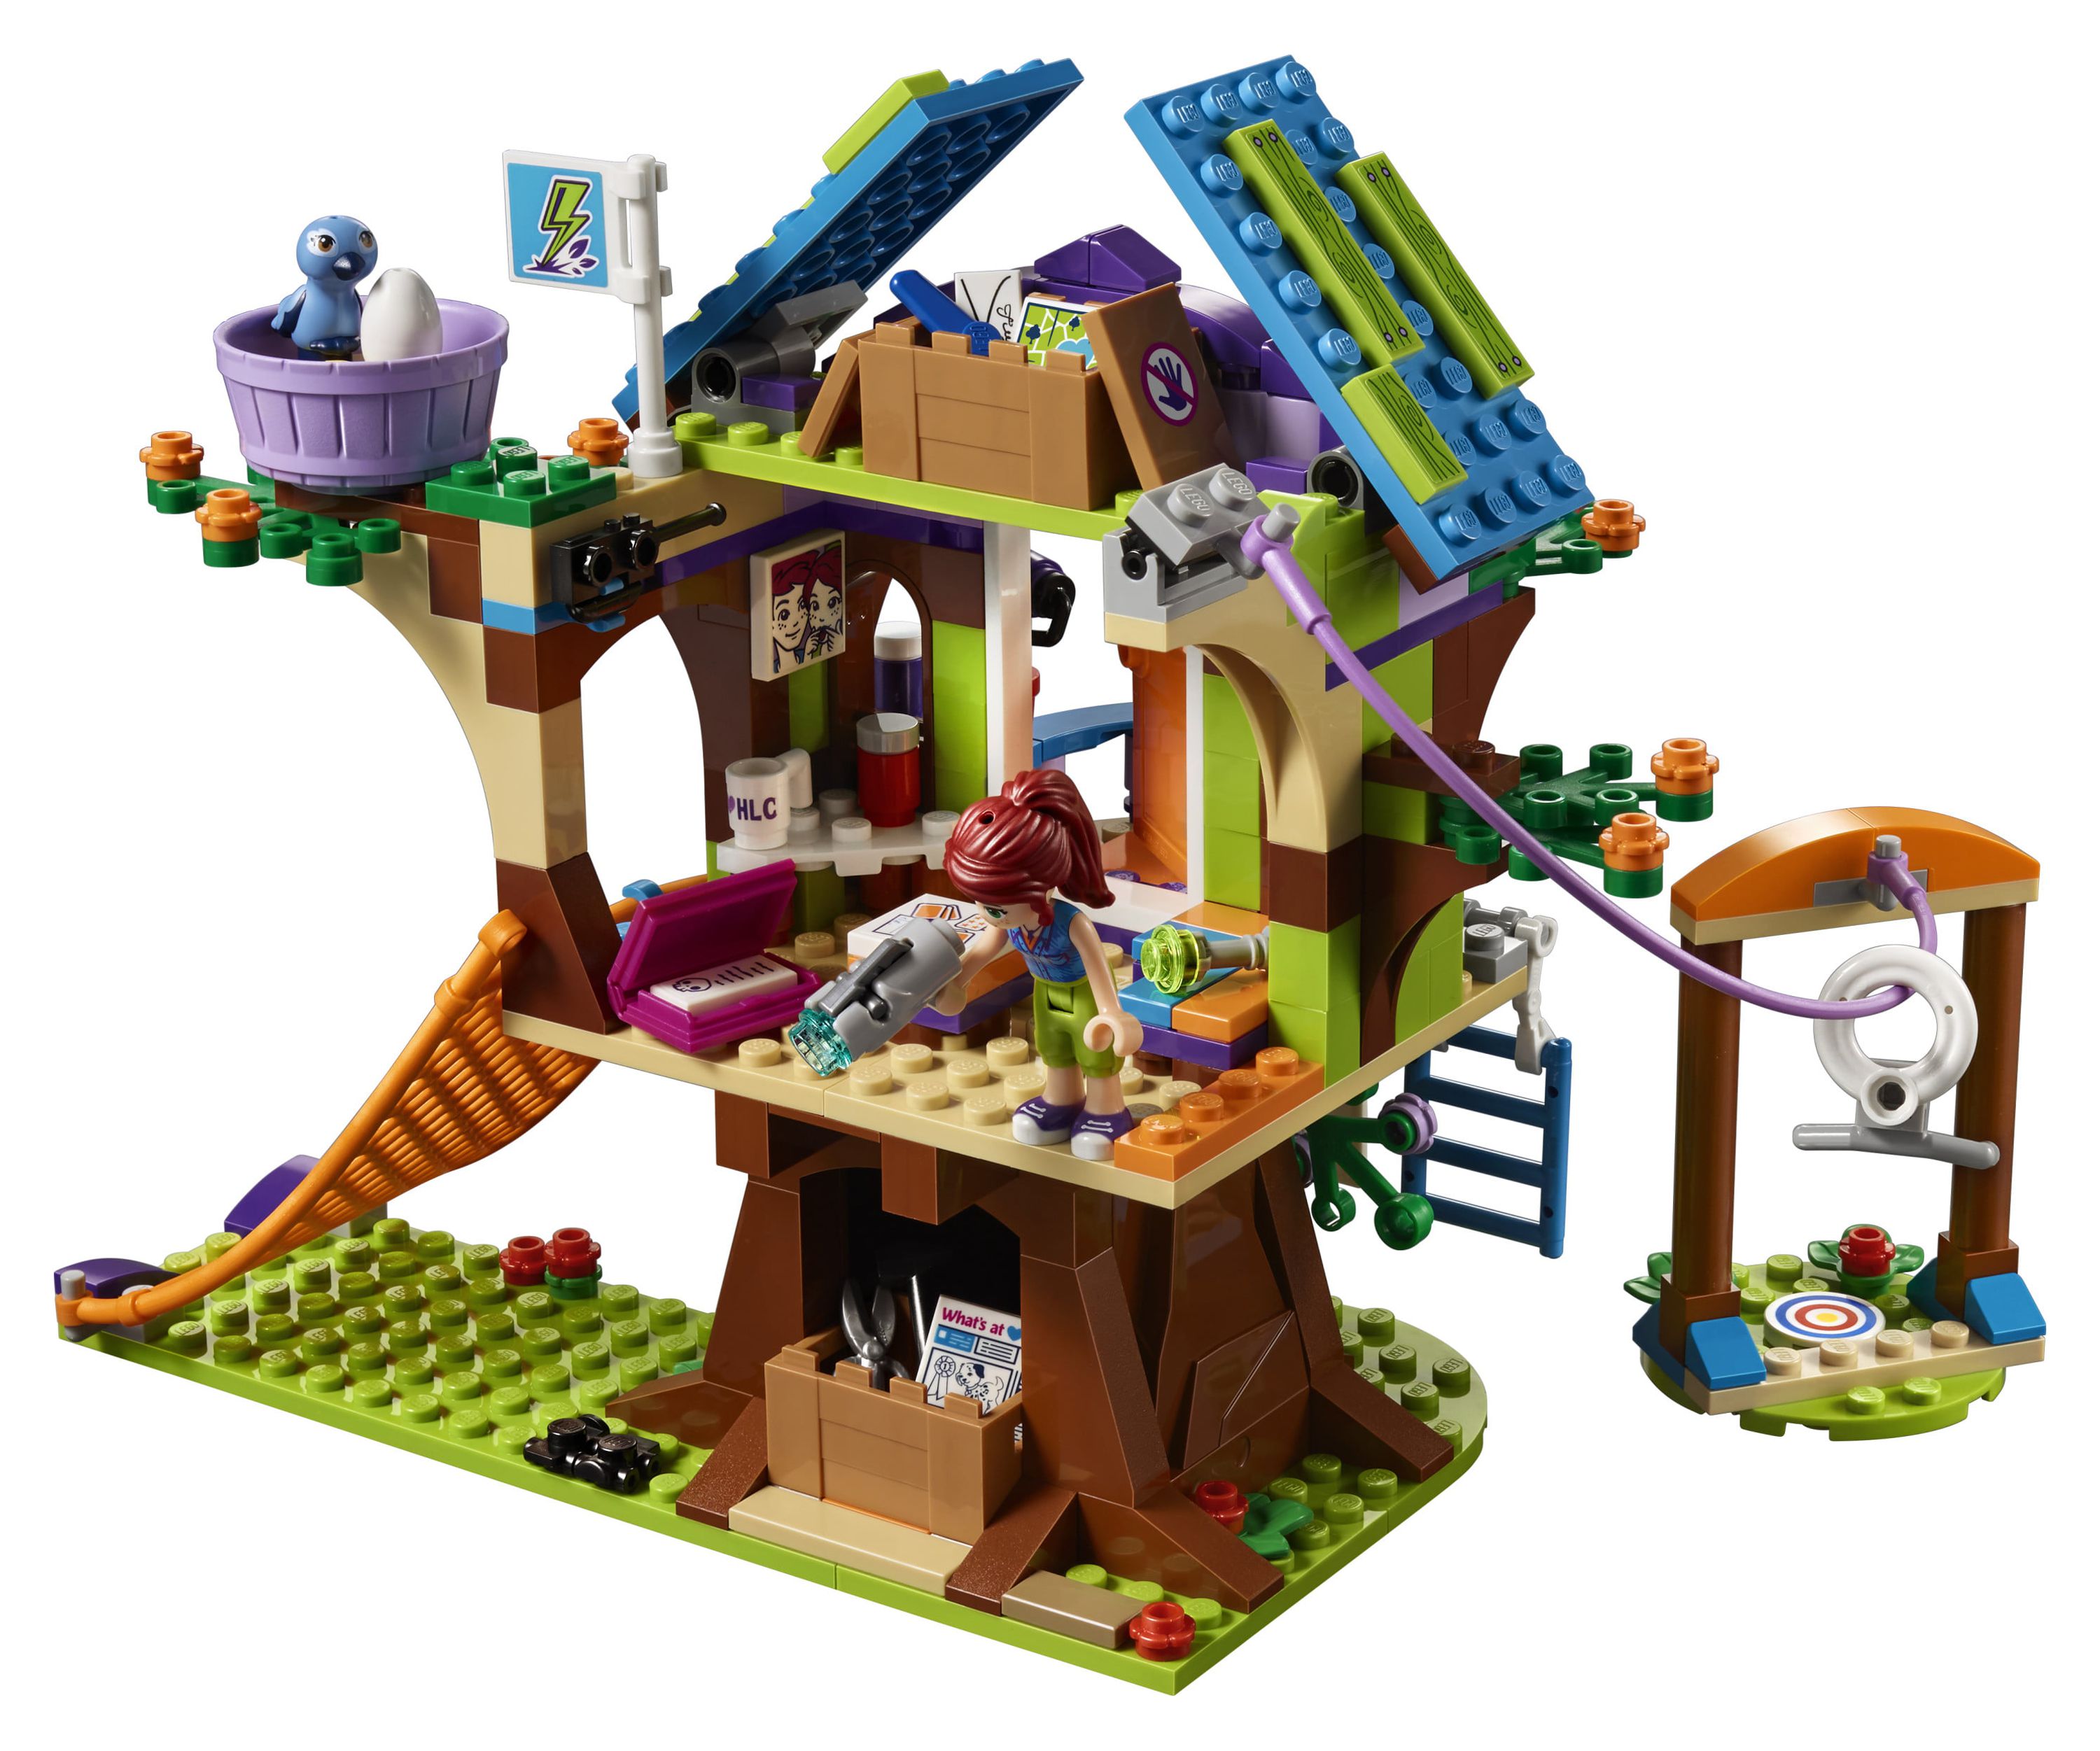 LEGO Friends Mia's Tree House 41335 - image 2 of 5